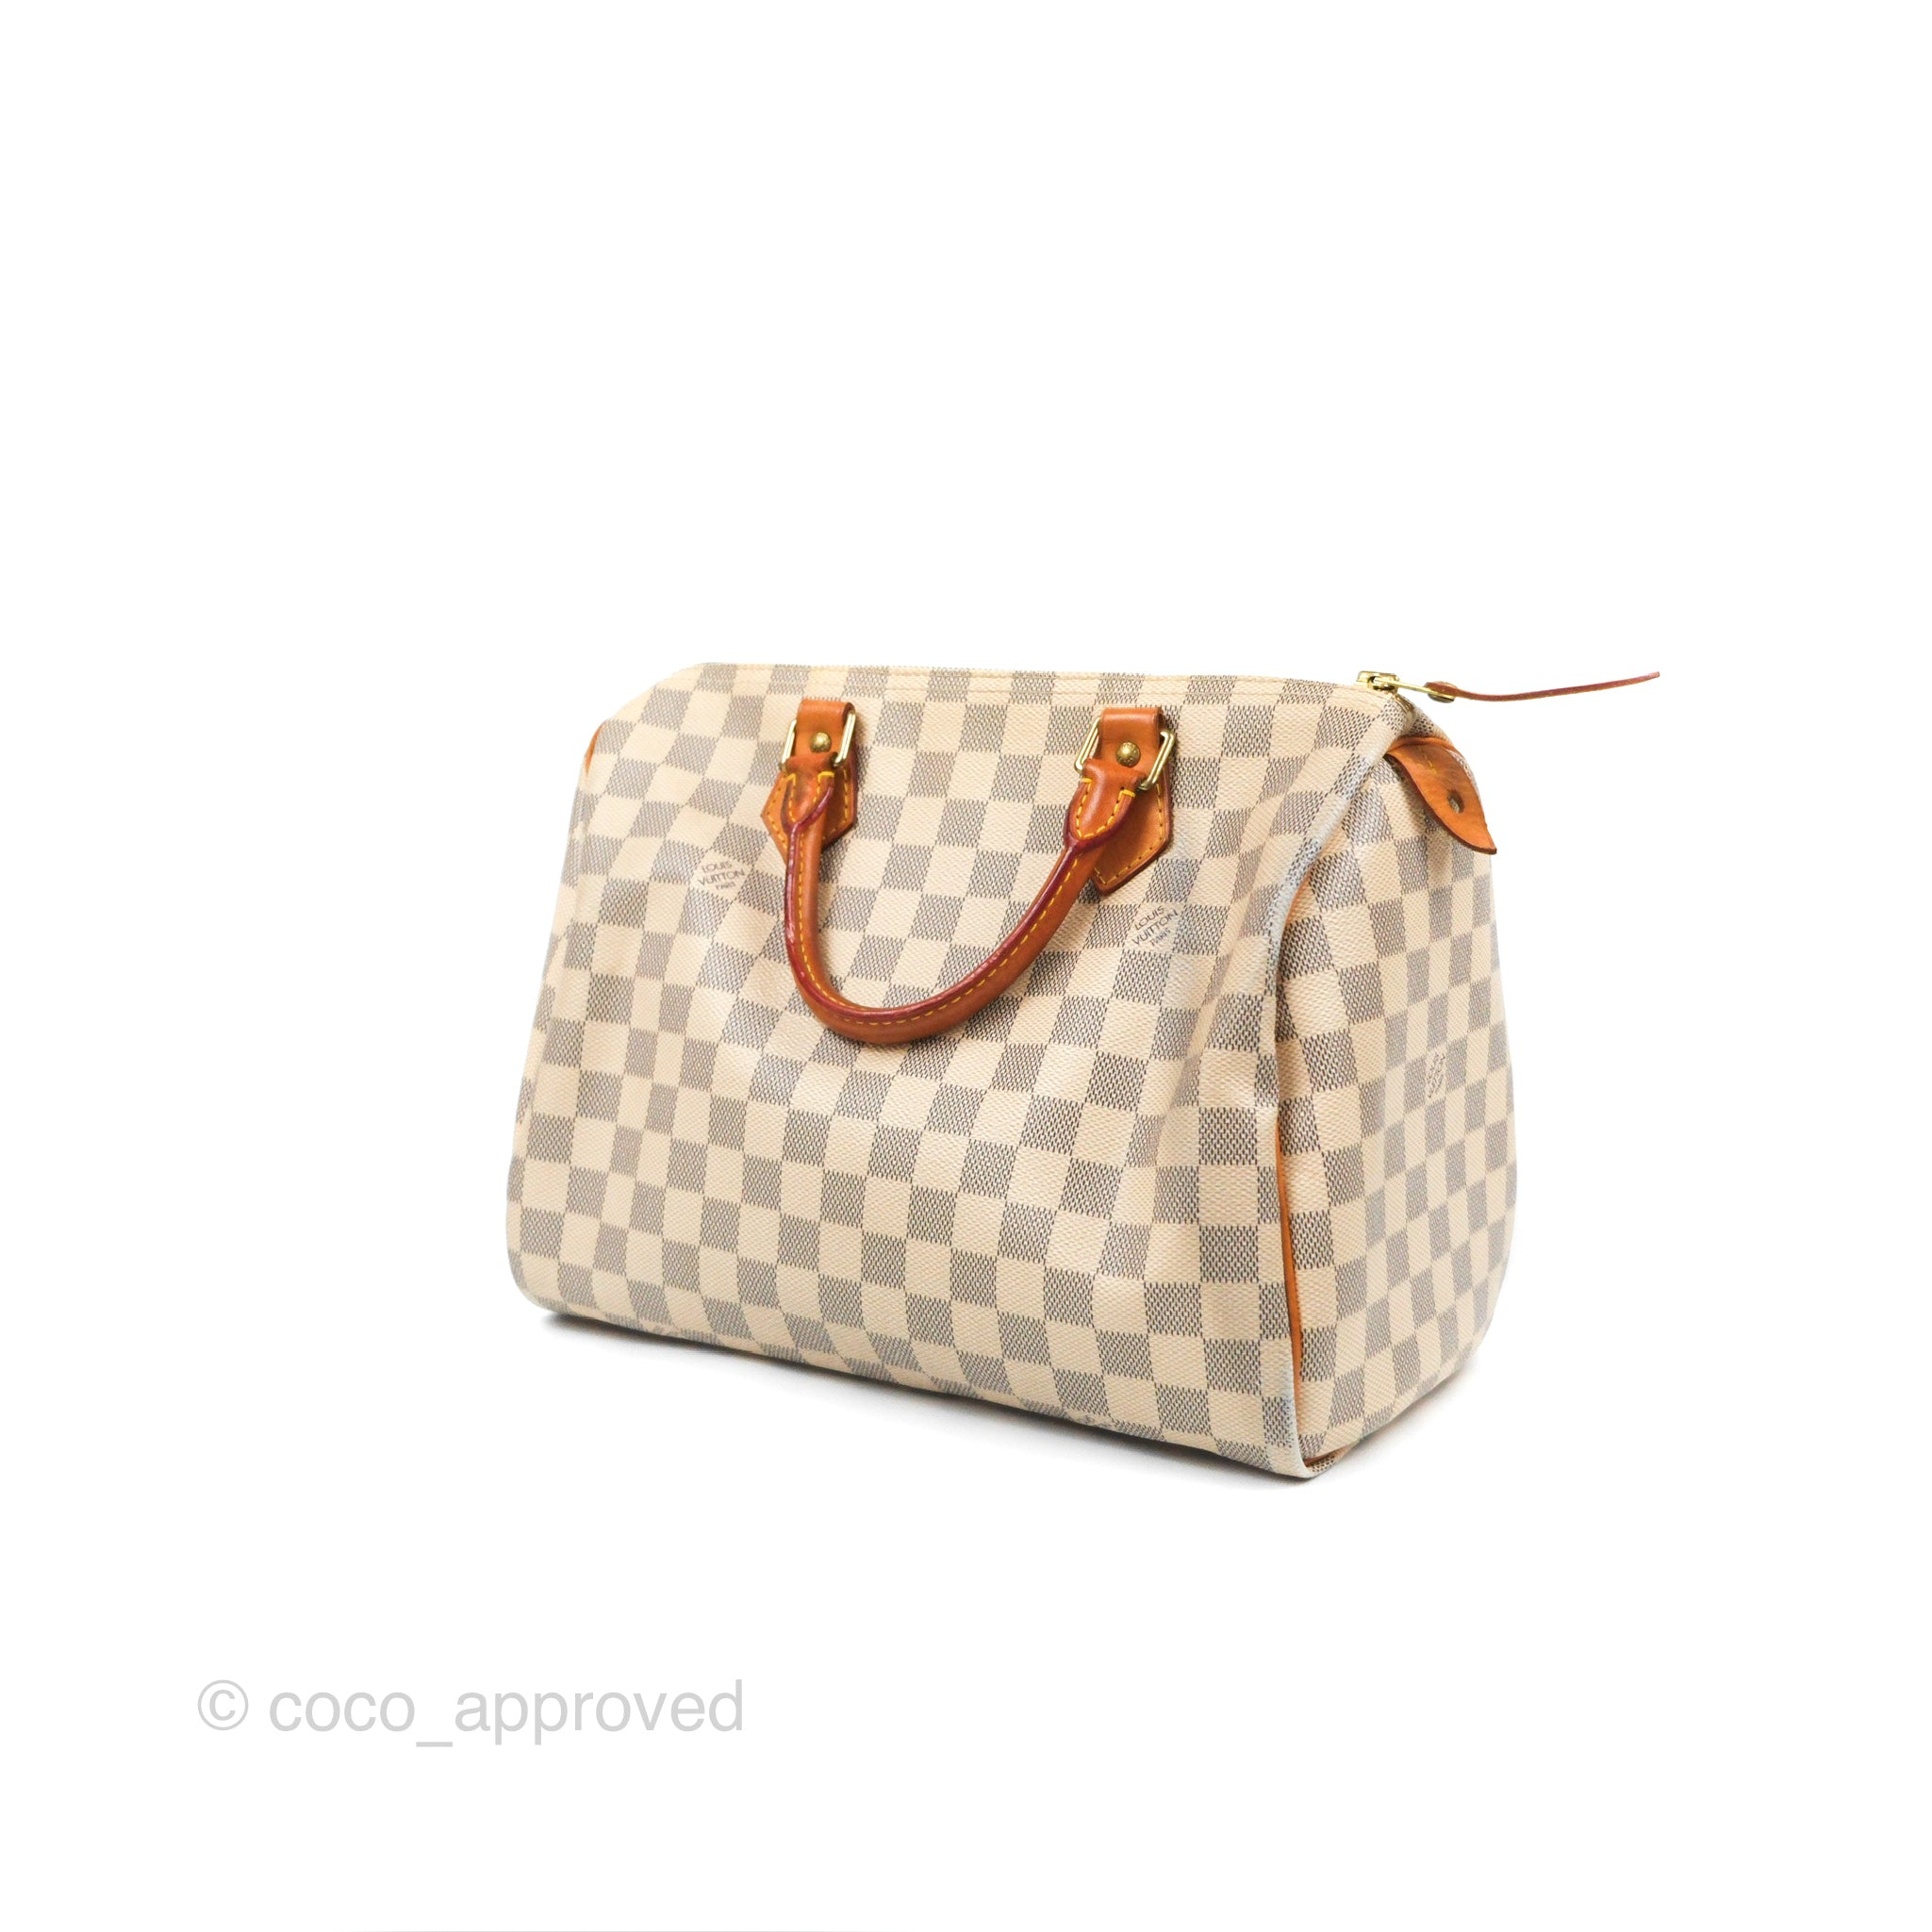 Speedy 30 Damier Azur Canvas - Women - Handbags